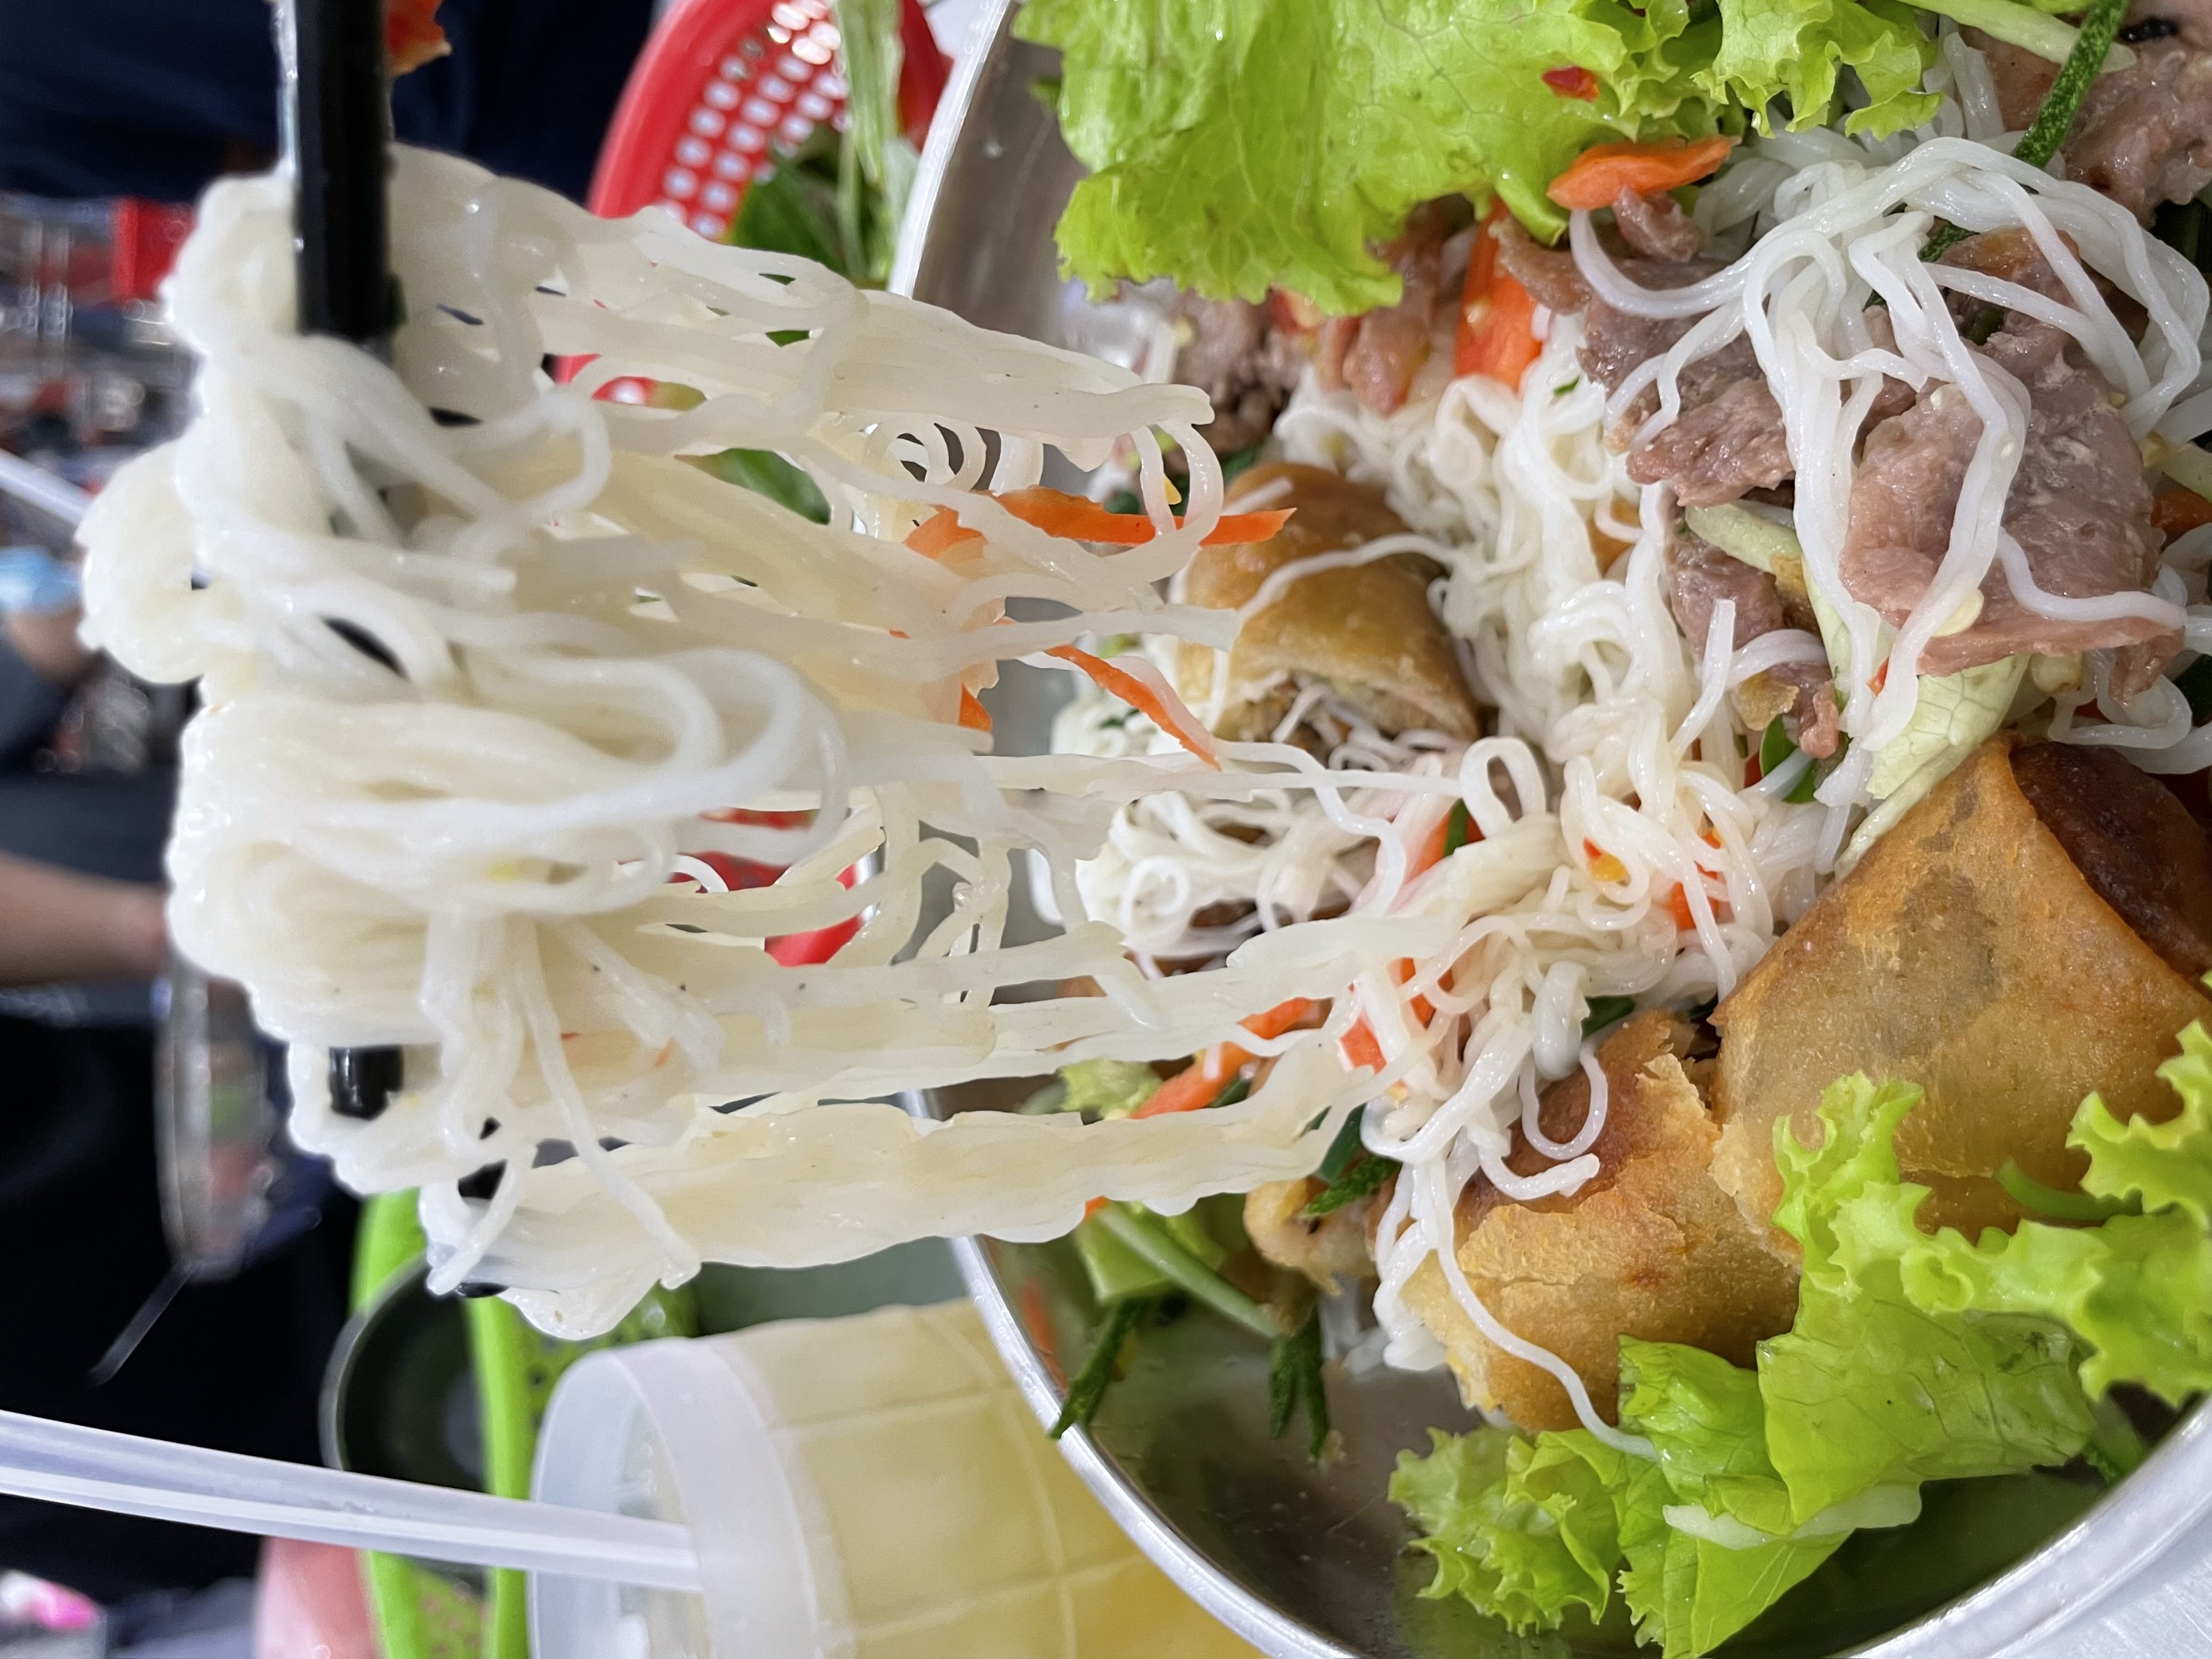 'Bún thịt nướng' consists mainly of rice noodles (bún) and grilled pork (thịt nướng). Photo: Cassanda Cassidy / Tuoi Tre News